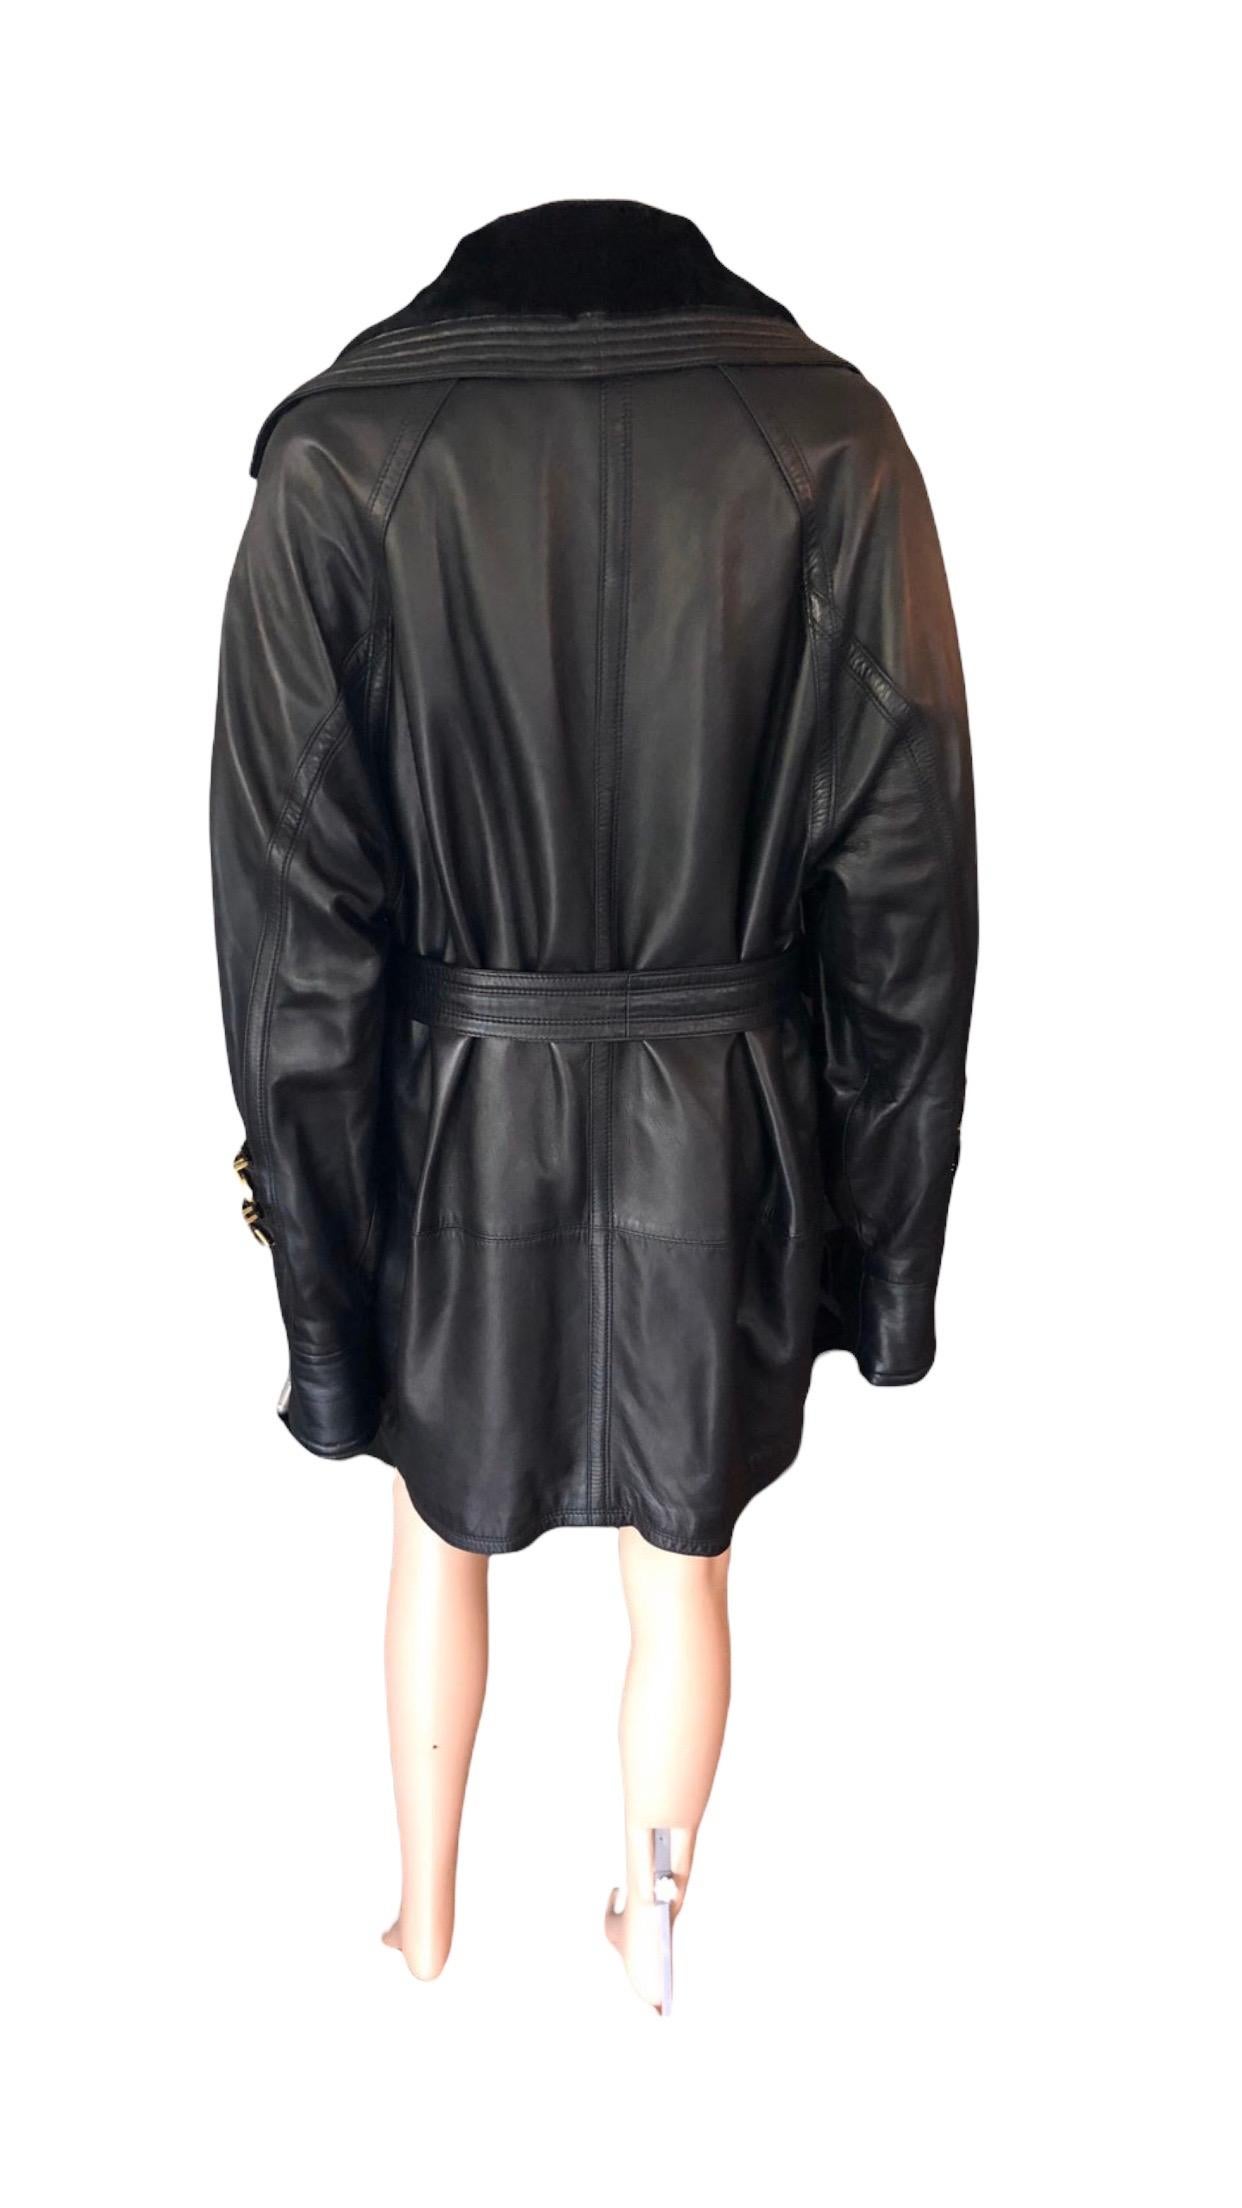 Gianni Versace c. 1990 Bondage Leather Belted Knee-Length Black Jacket Coat For Sale 8